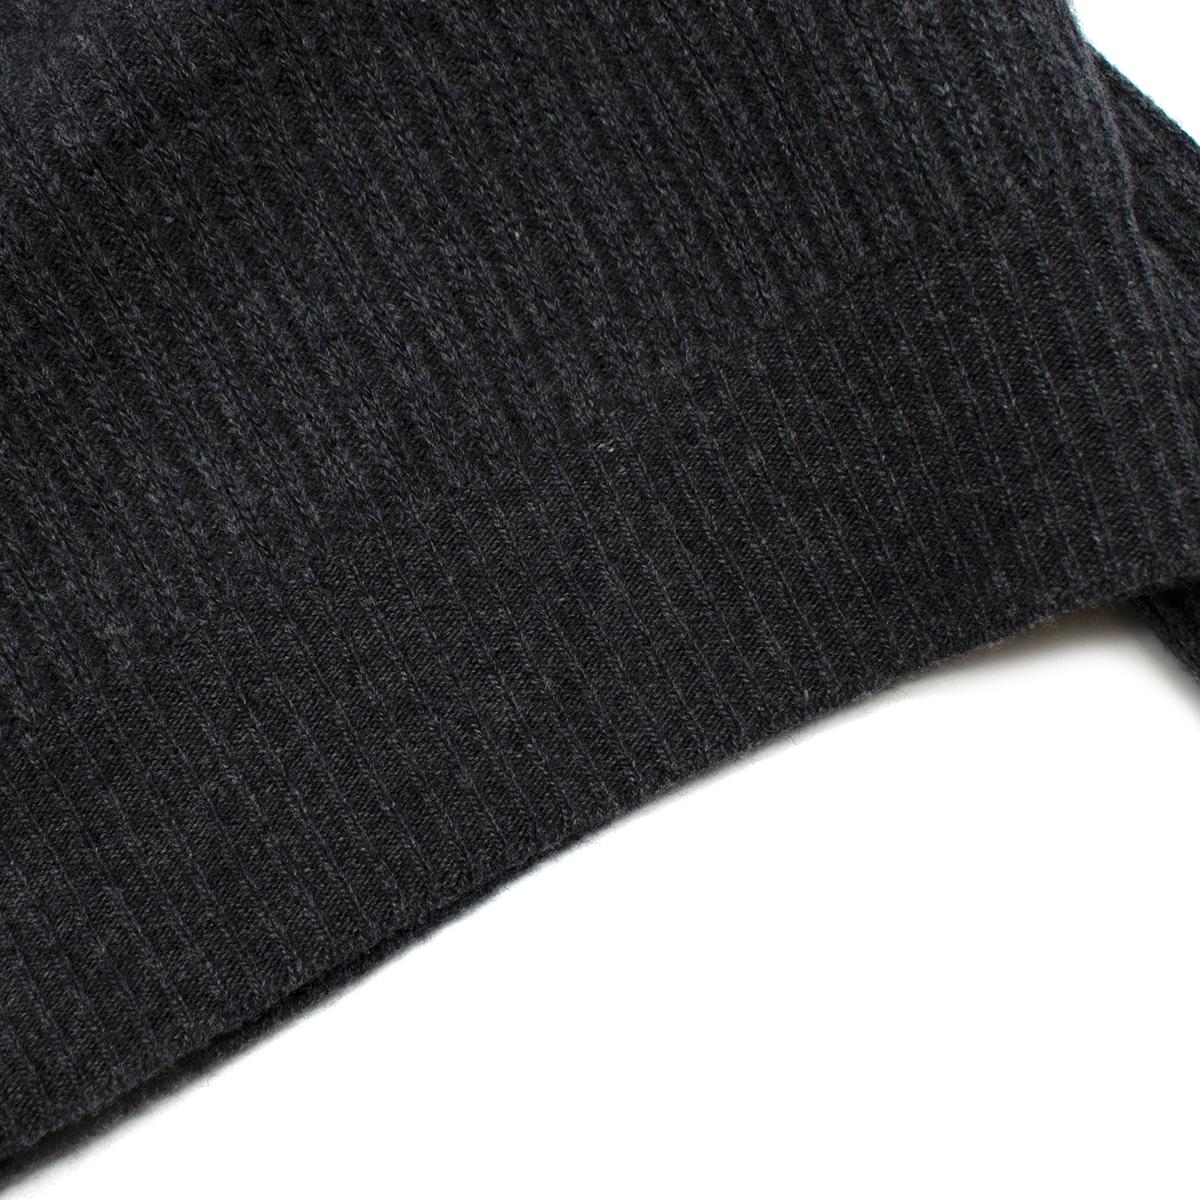 Ermenegildo Zenga Cashmere Blend Grey Sweater - Us size 38 For Sale 4